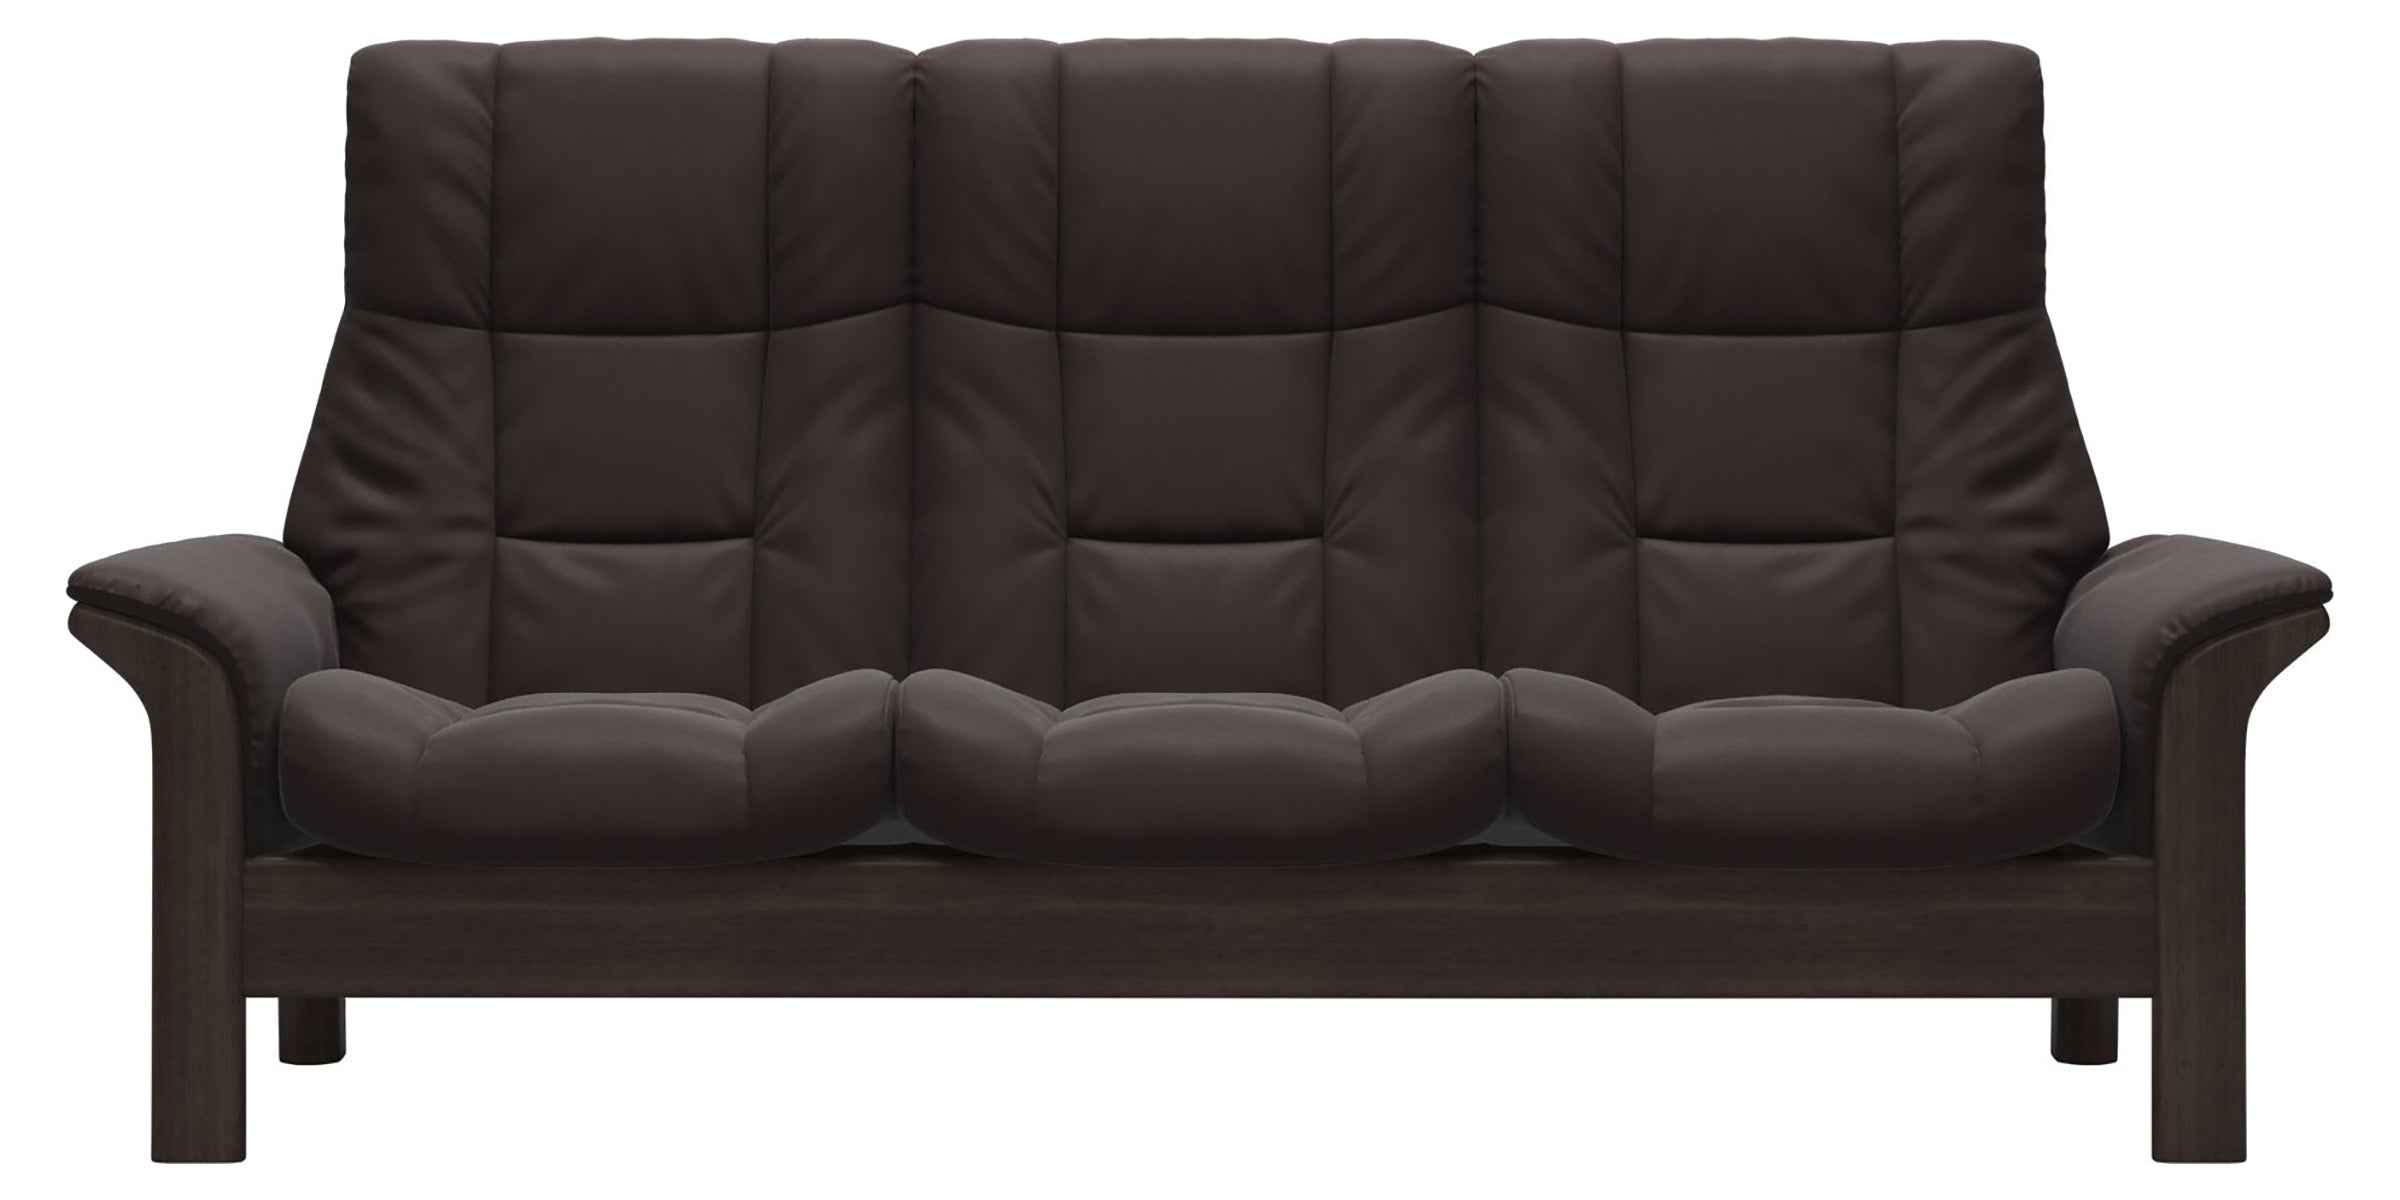 Paloma Leather Chocolate and Wenge Base | Stressless Windsor 3-Seater High Back Sofa | Valley Ridge Furniture